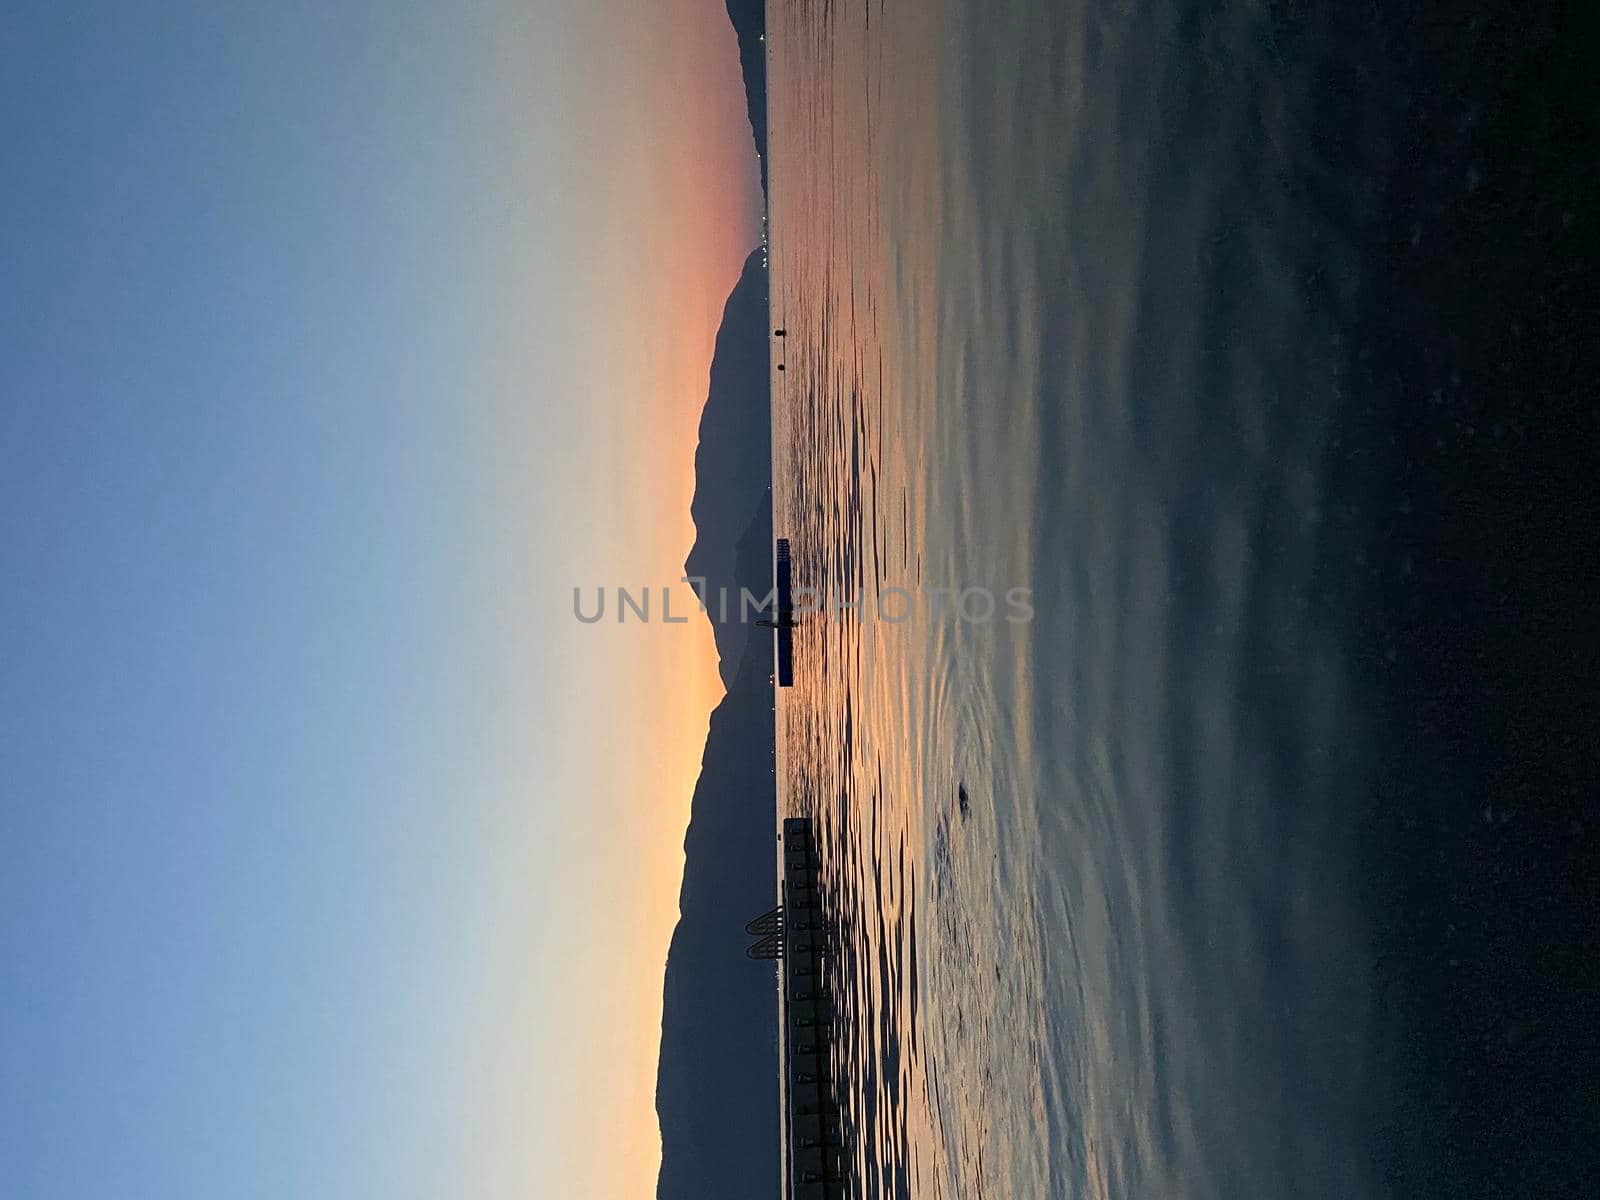 Tourist admiring the sunrise on tropical island - stock photo by kaliaevaen